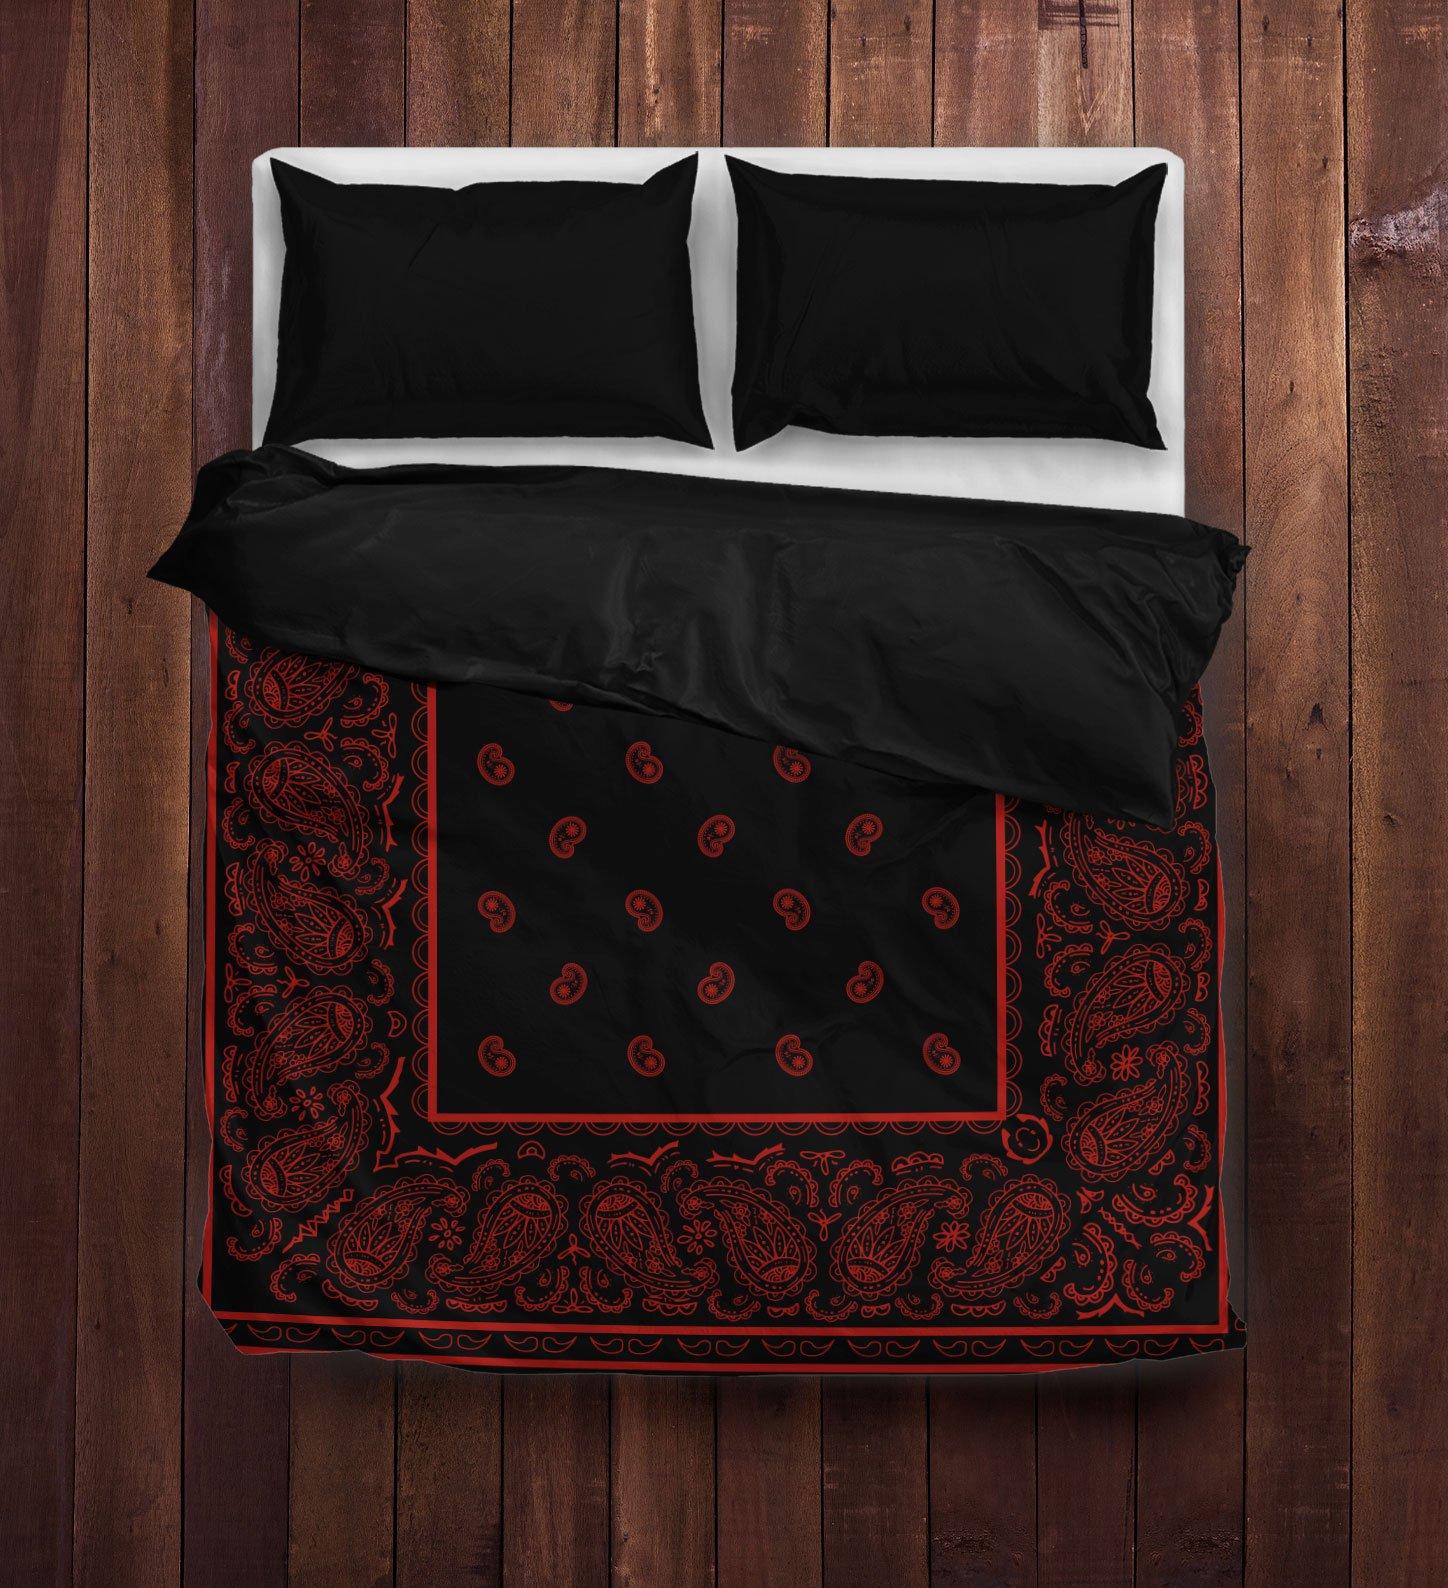 Black and red bandana duvet cover bedding set - king